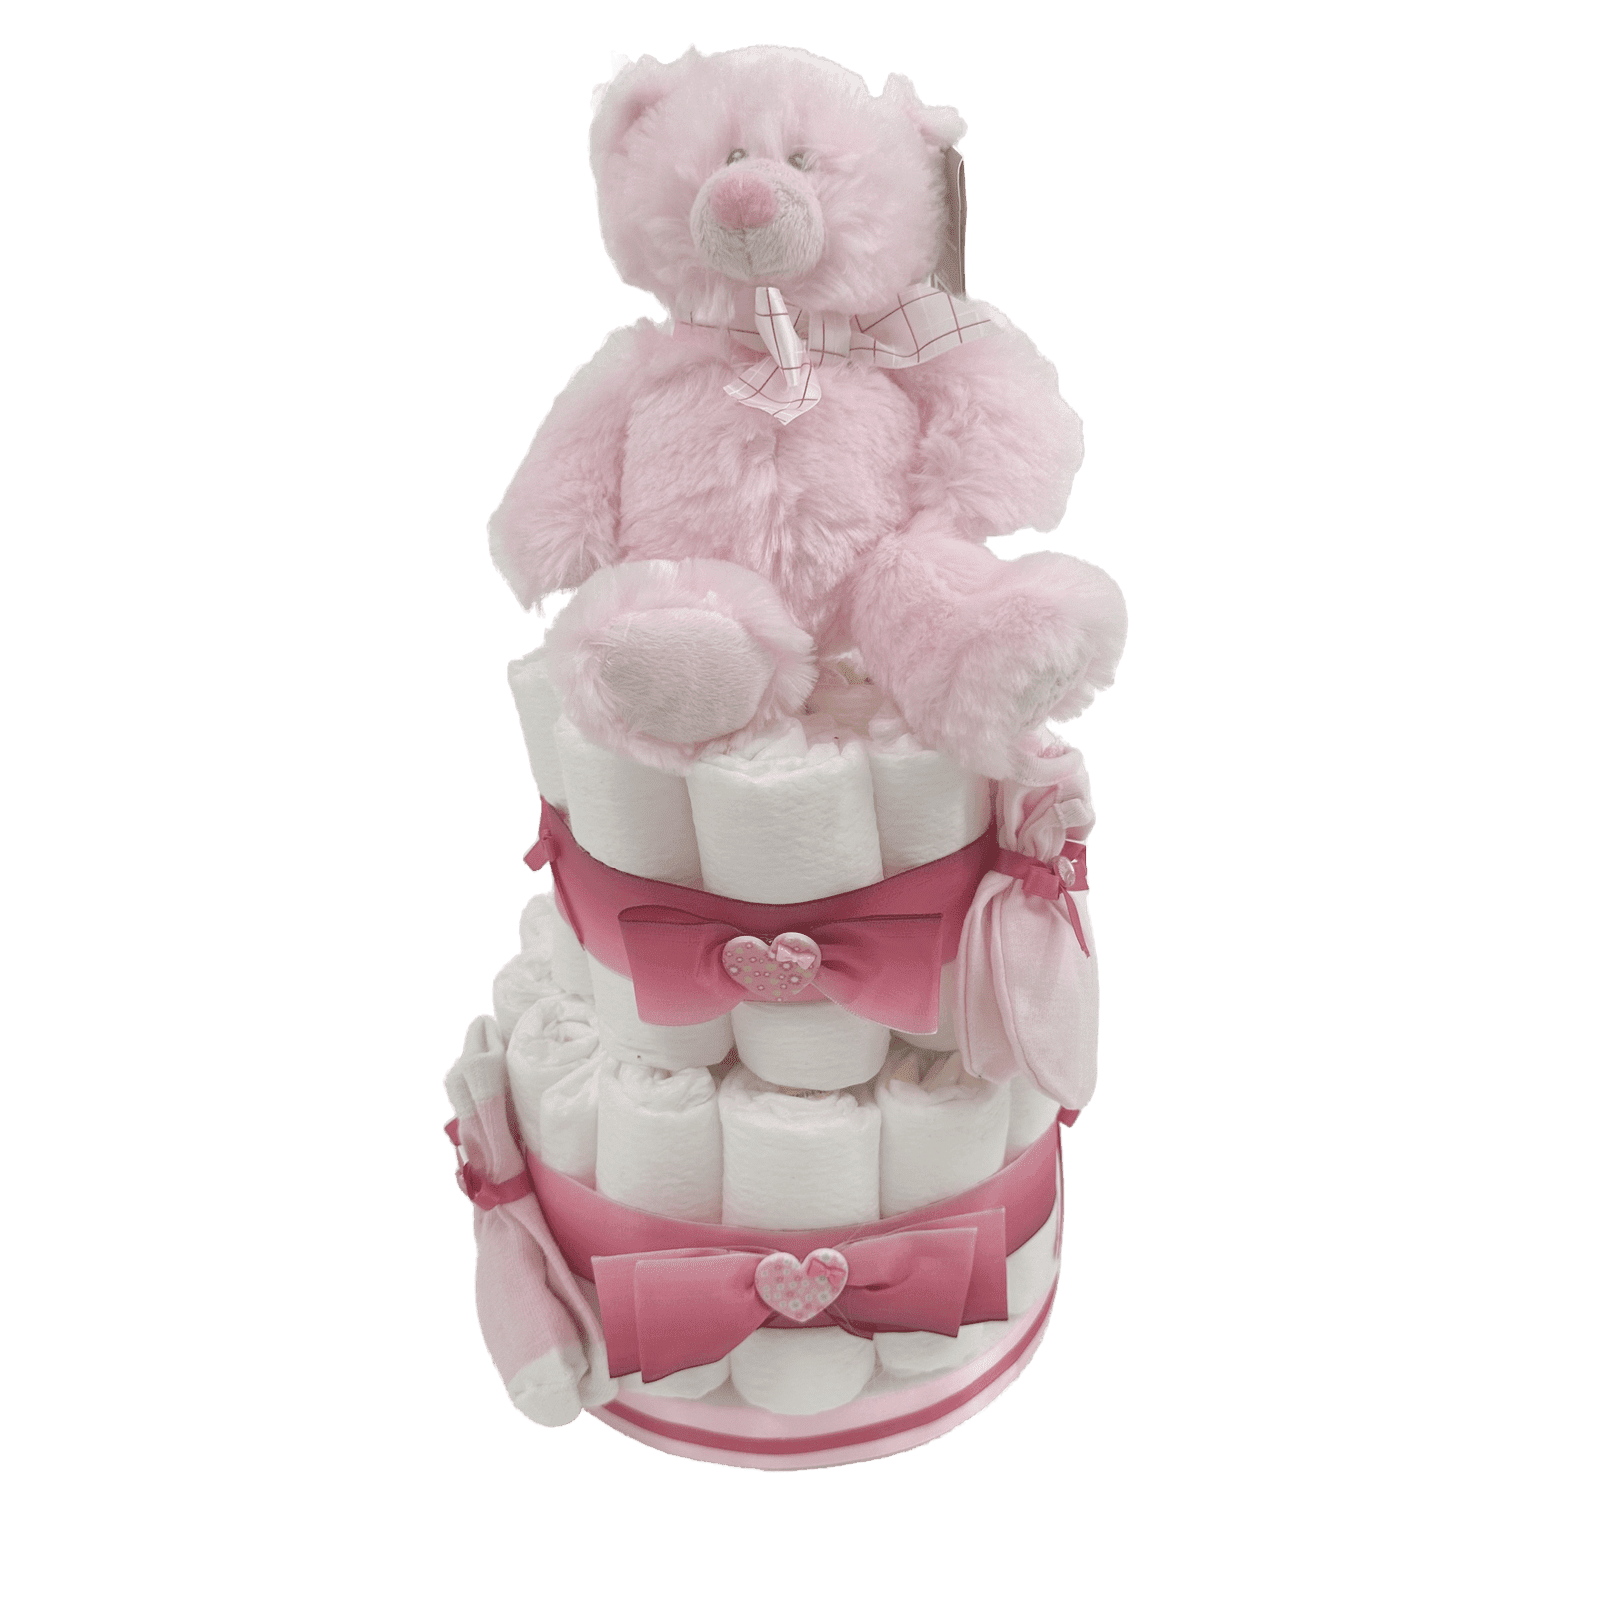 Unisex Nappy Cake | Buy Gender Neutral Diaper Cake Online – Nappie Cakes